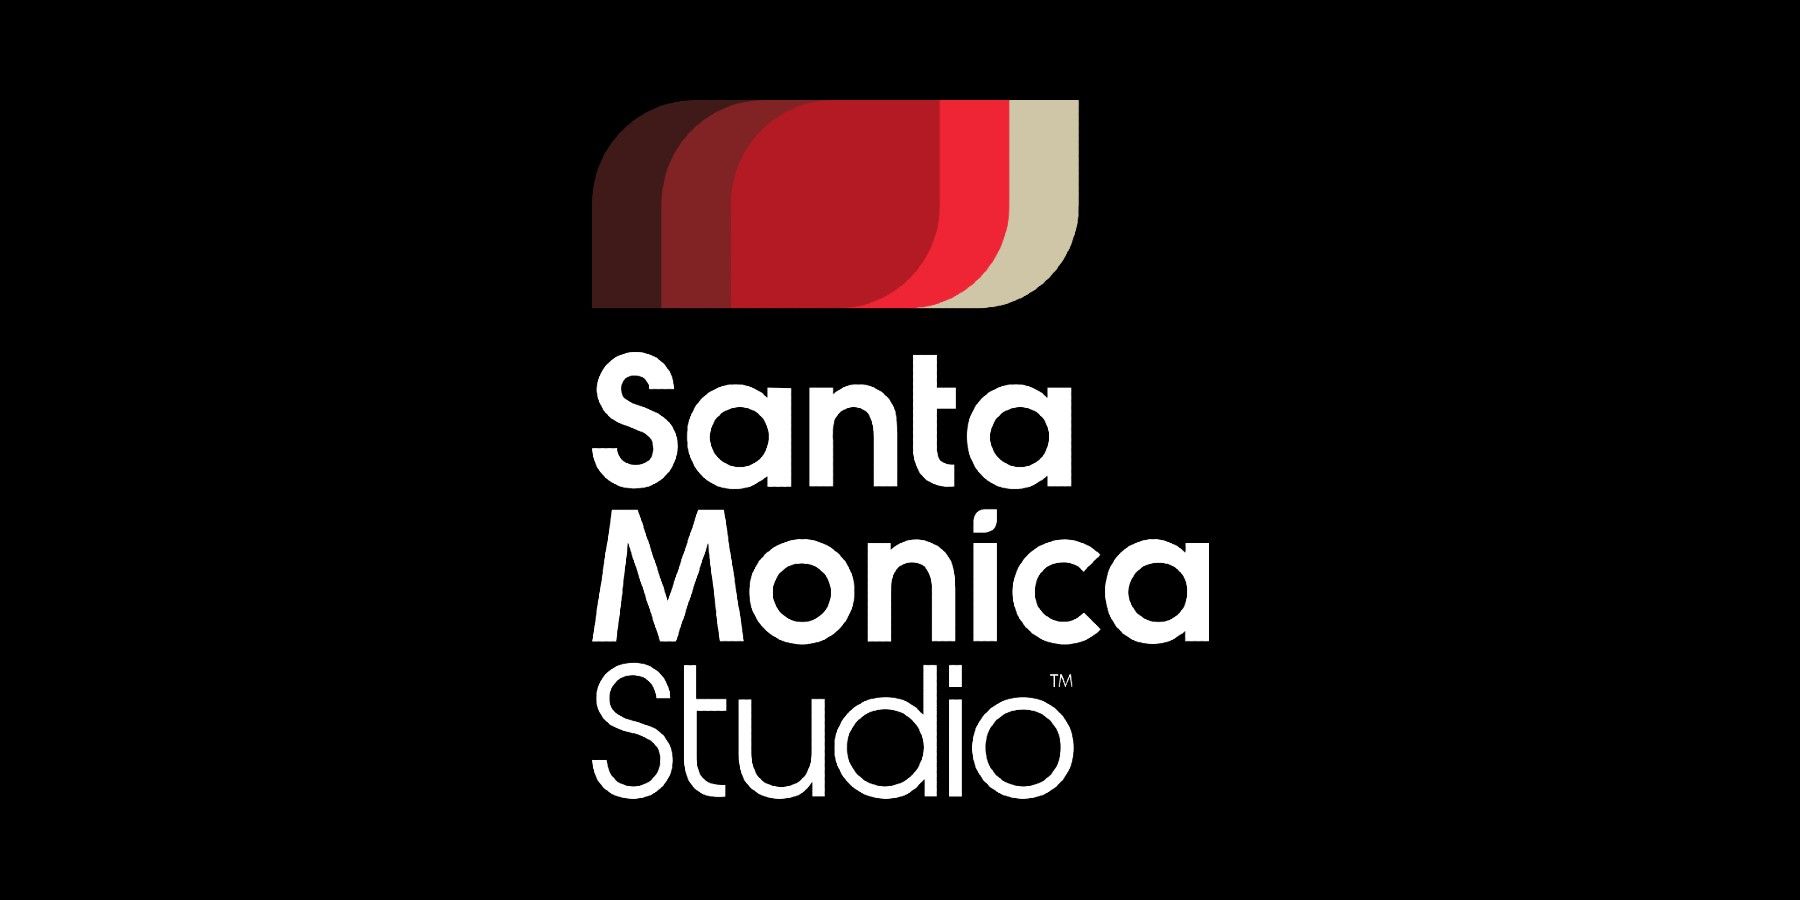 santa monica studio logo black background